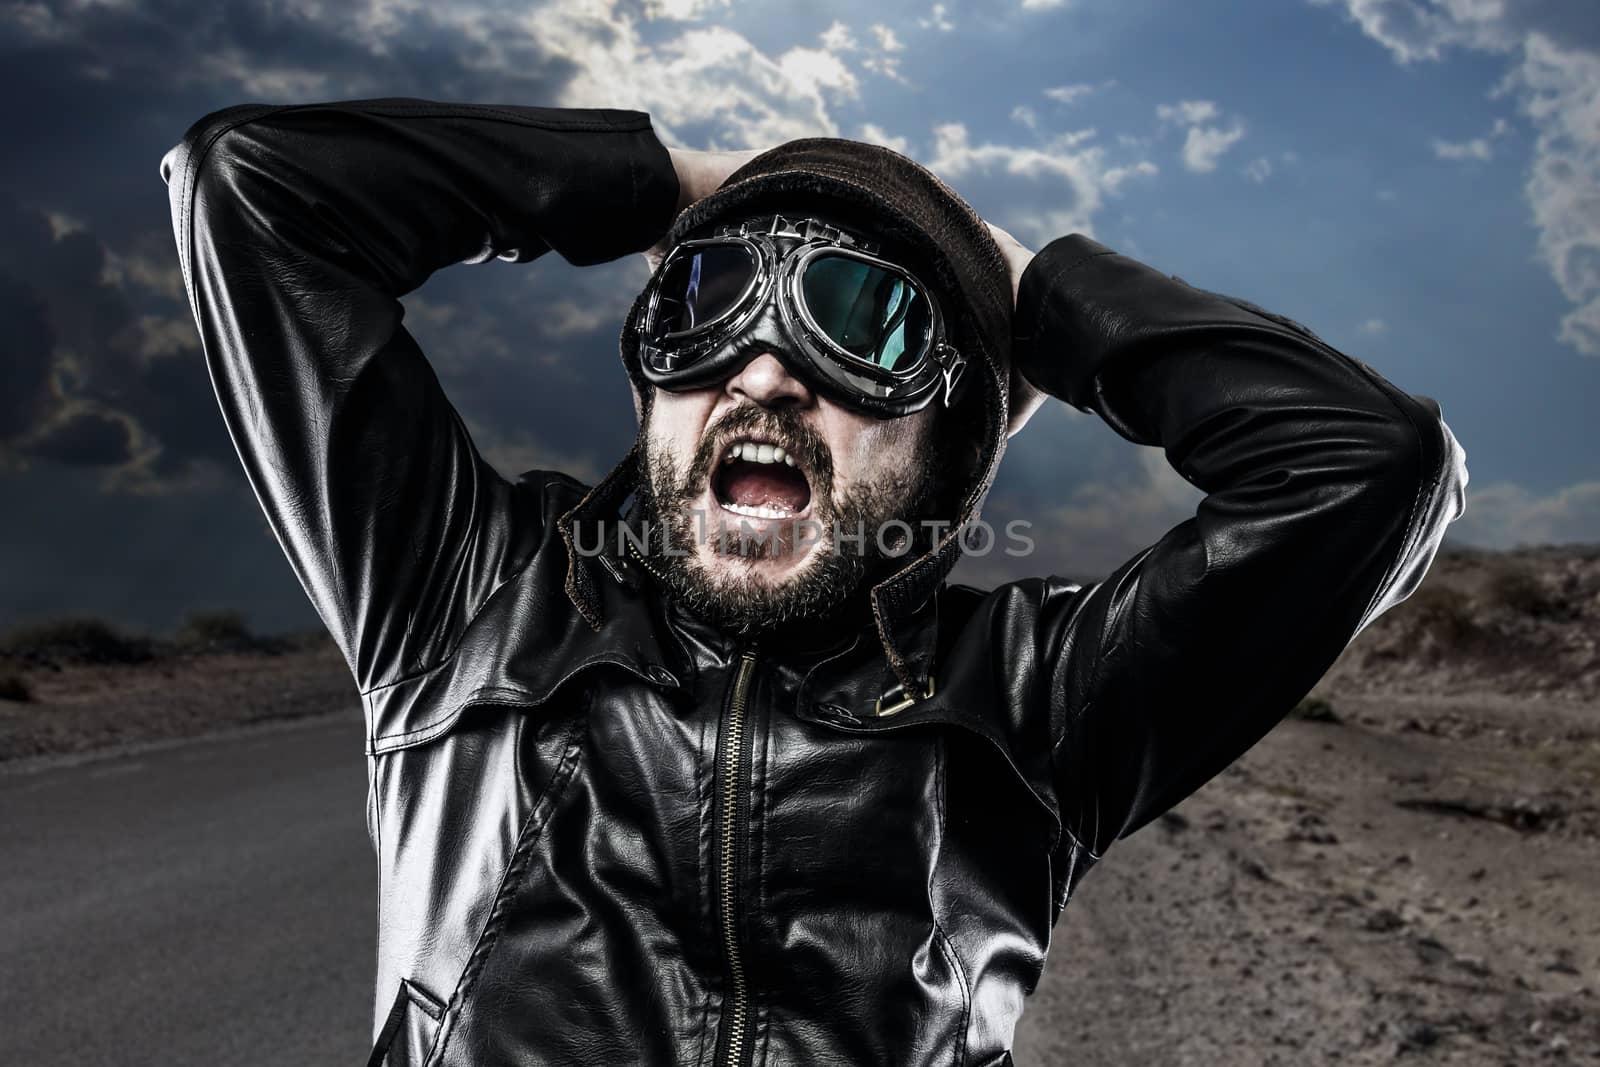 surprised biker with black leather jacket and old glasses by FernandoCortes